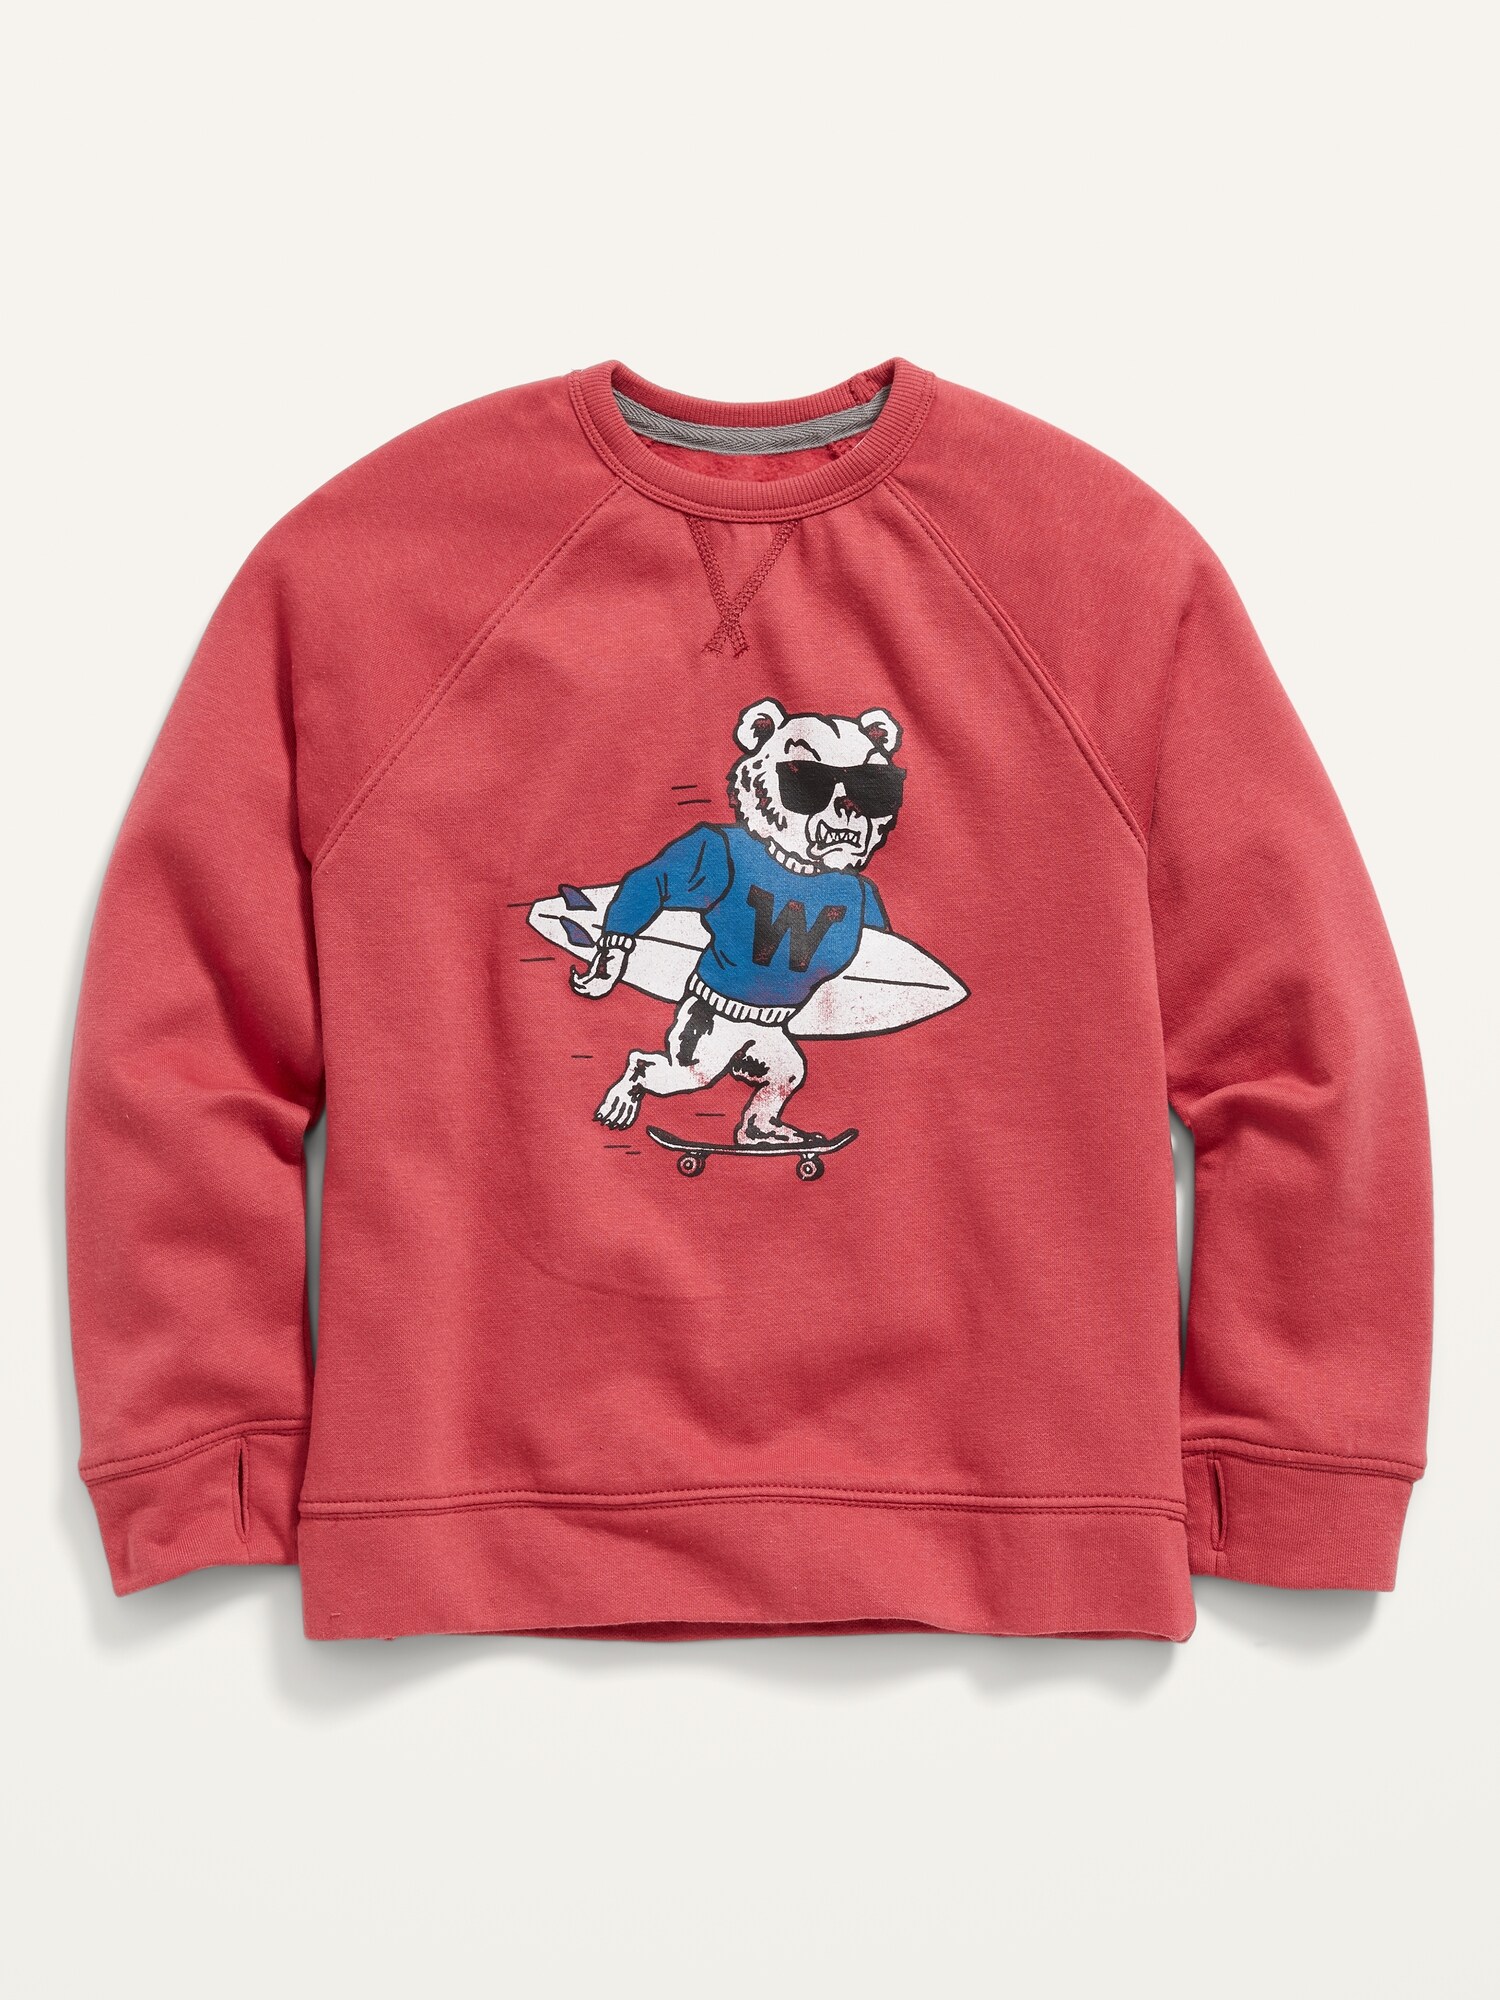 Vintage Crew-Neck Pullover Sweatshirt for Boys